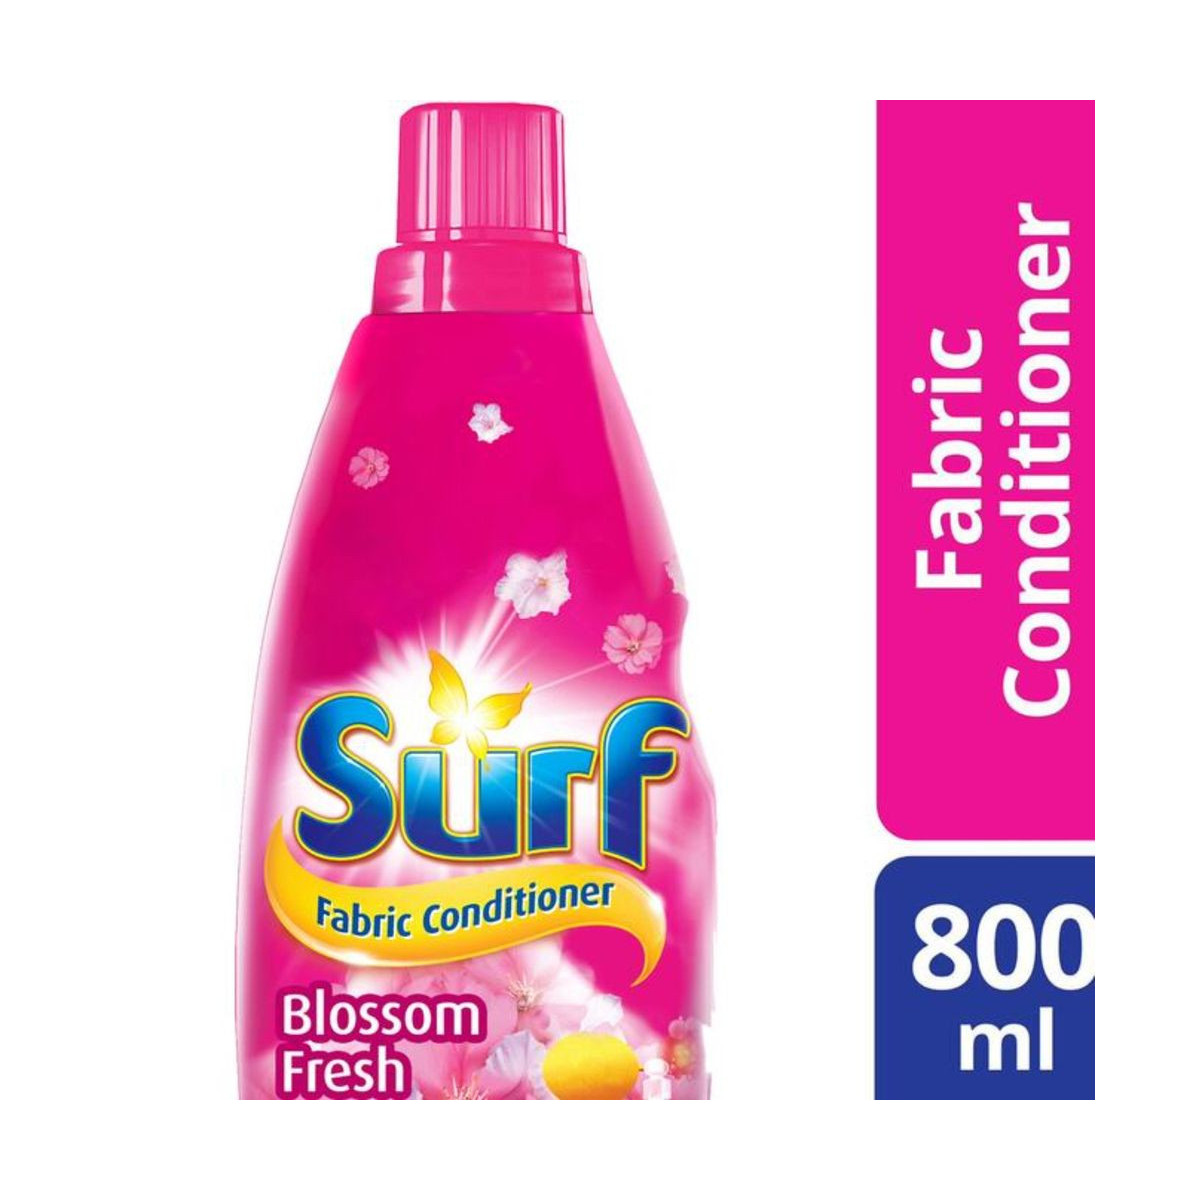 Surf Fabric Conditioner Blossom Fresh 800ML Bottle